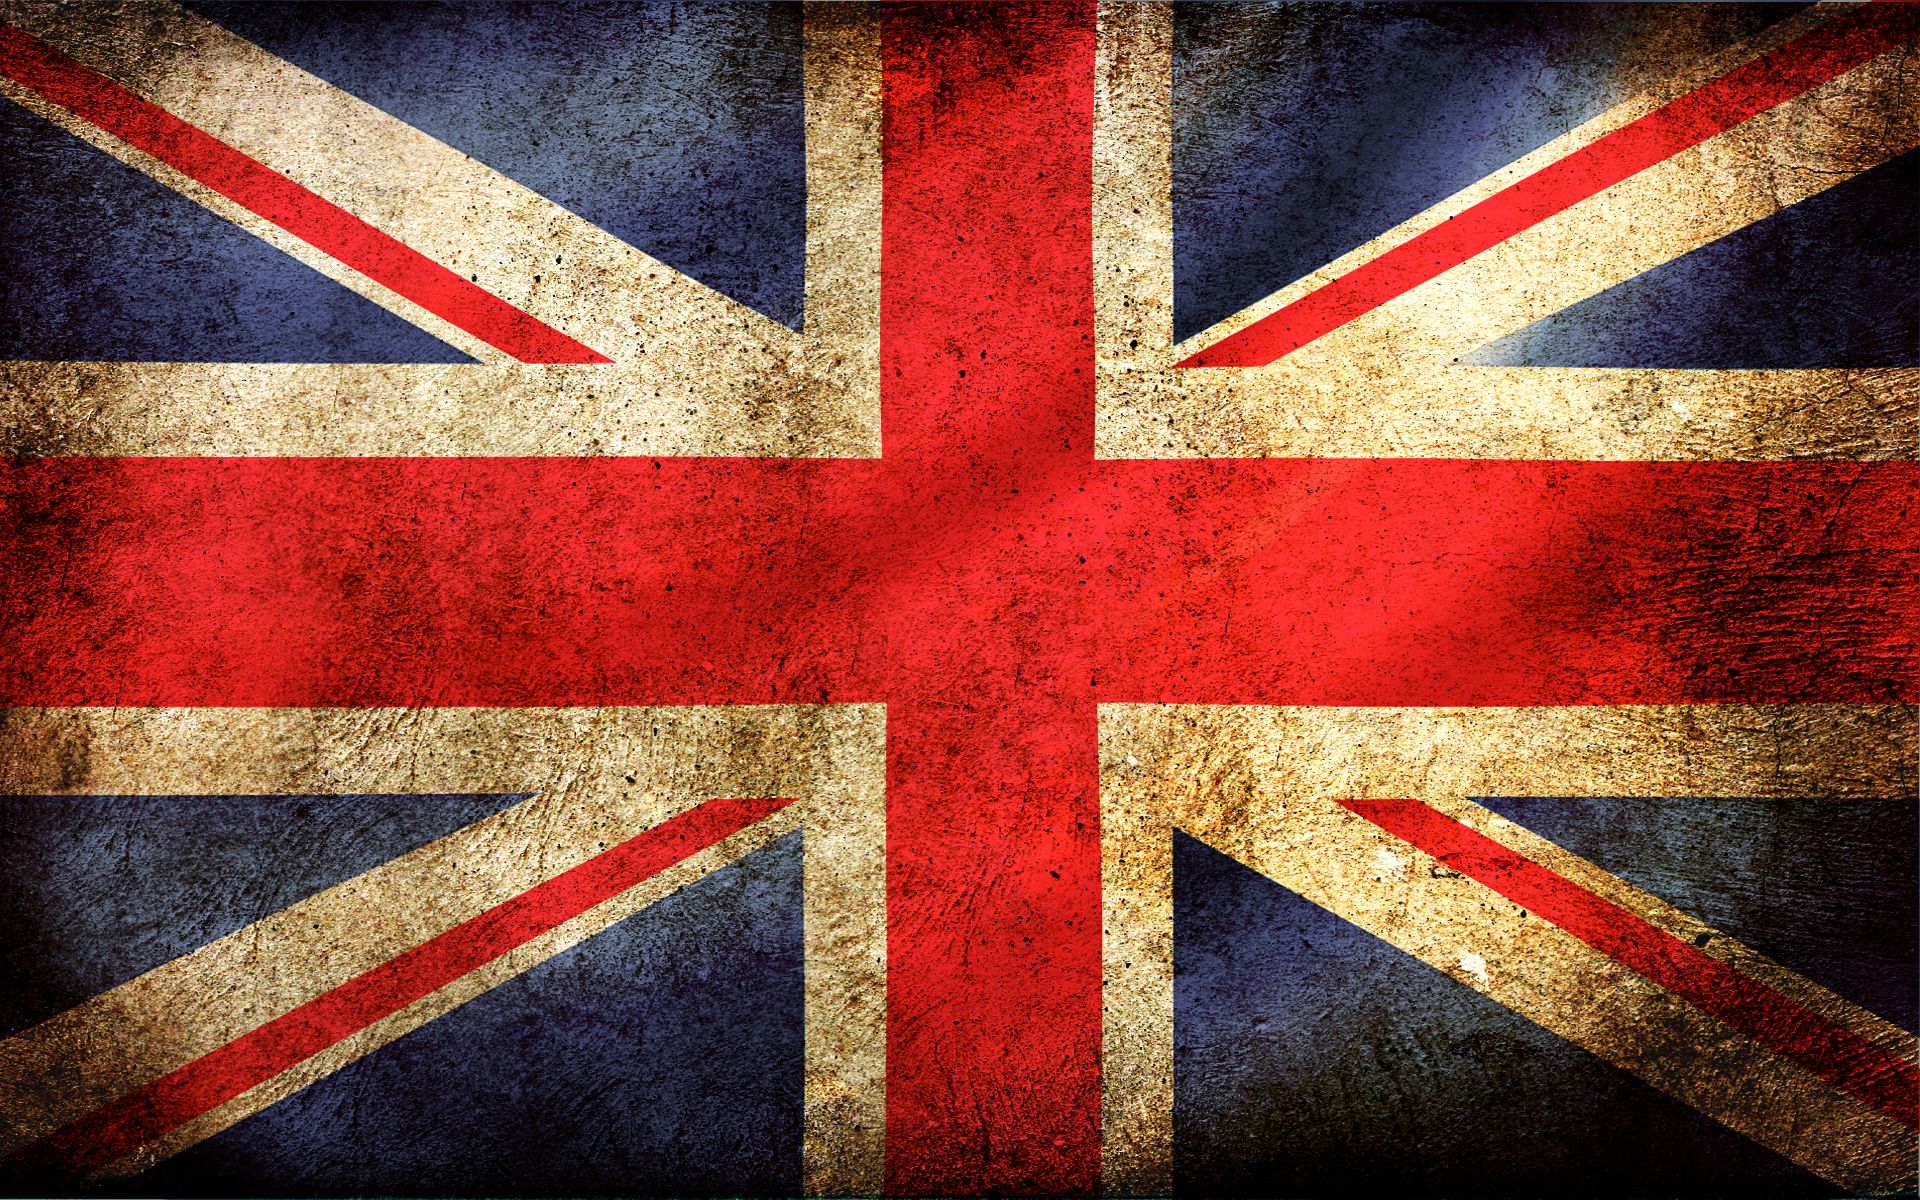 england flag - Google Search | Union Jack | Pinterest | Flag art ...